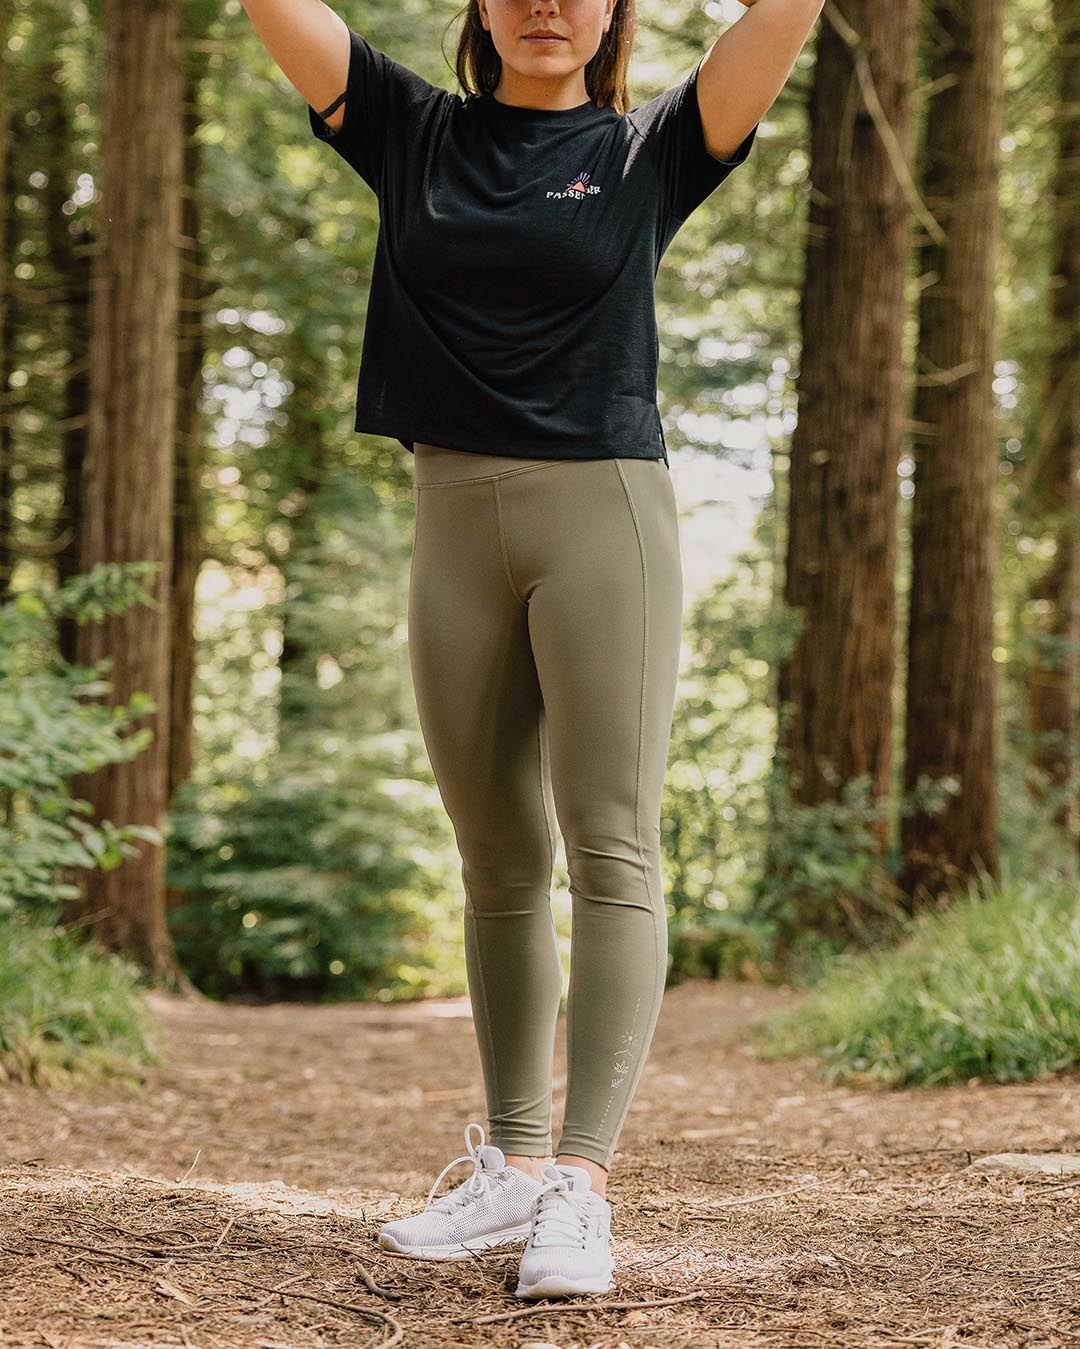 fvwitlyh Knee Length Yoga Pants Womens Mid Waist Yoga Leggings